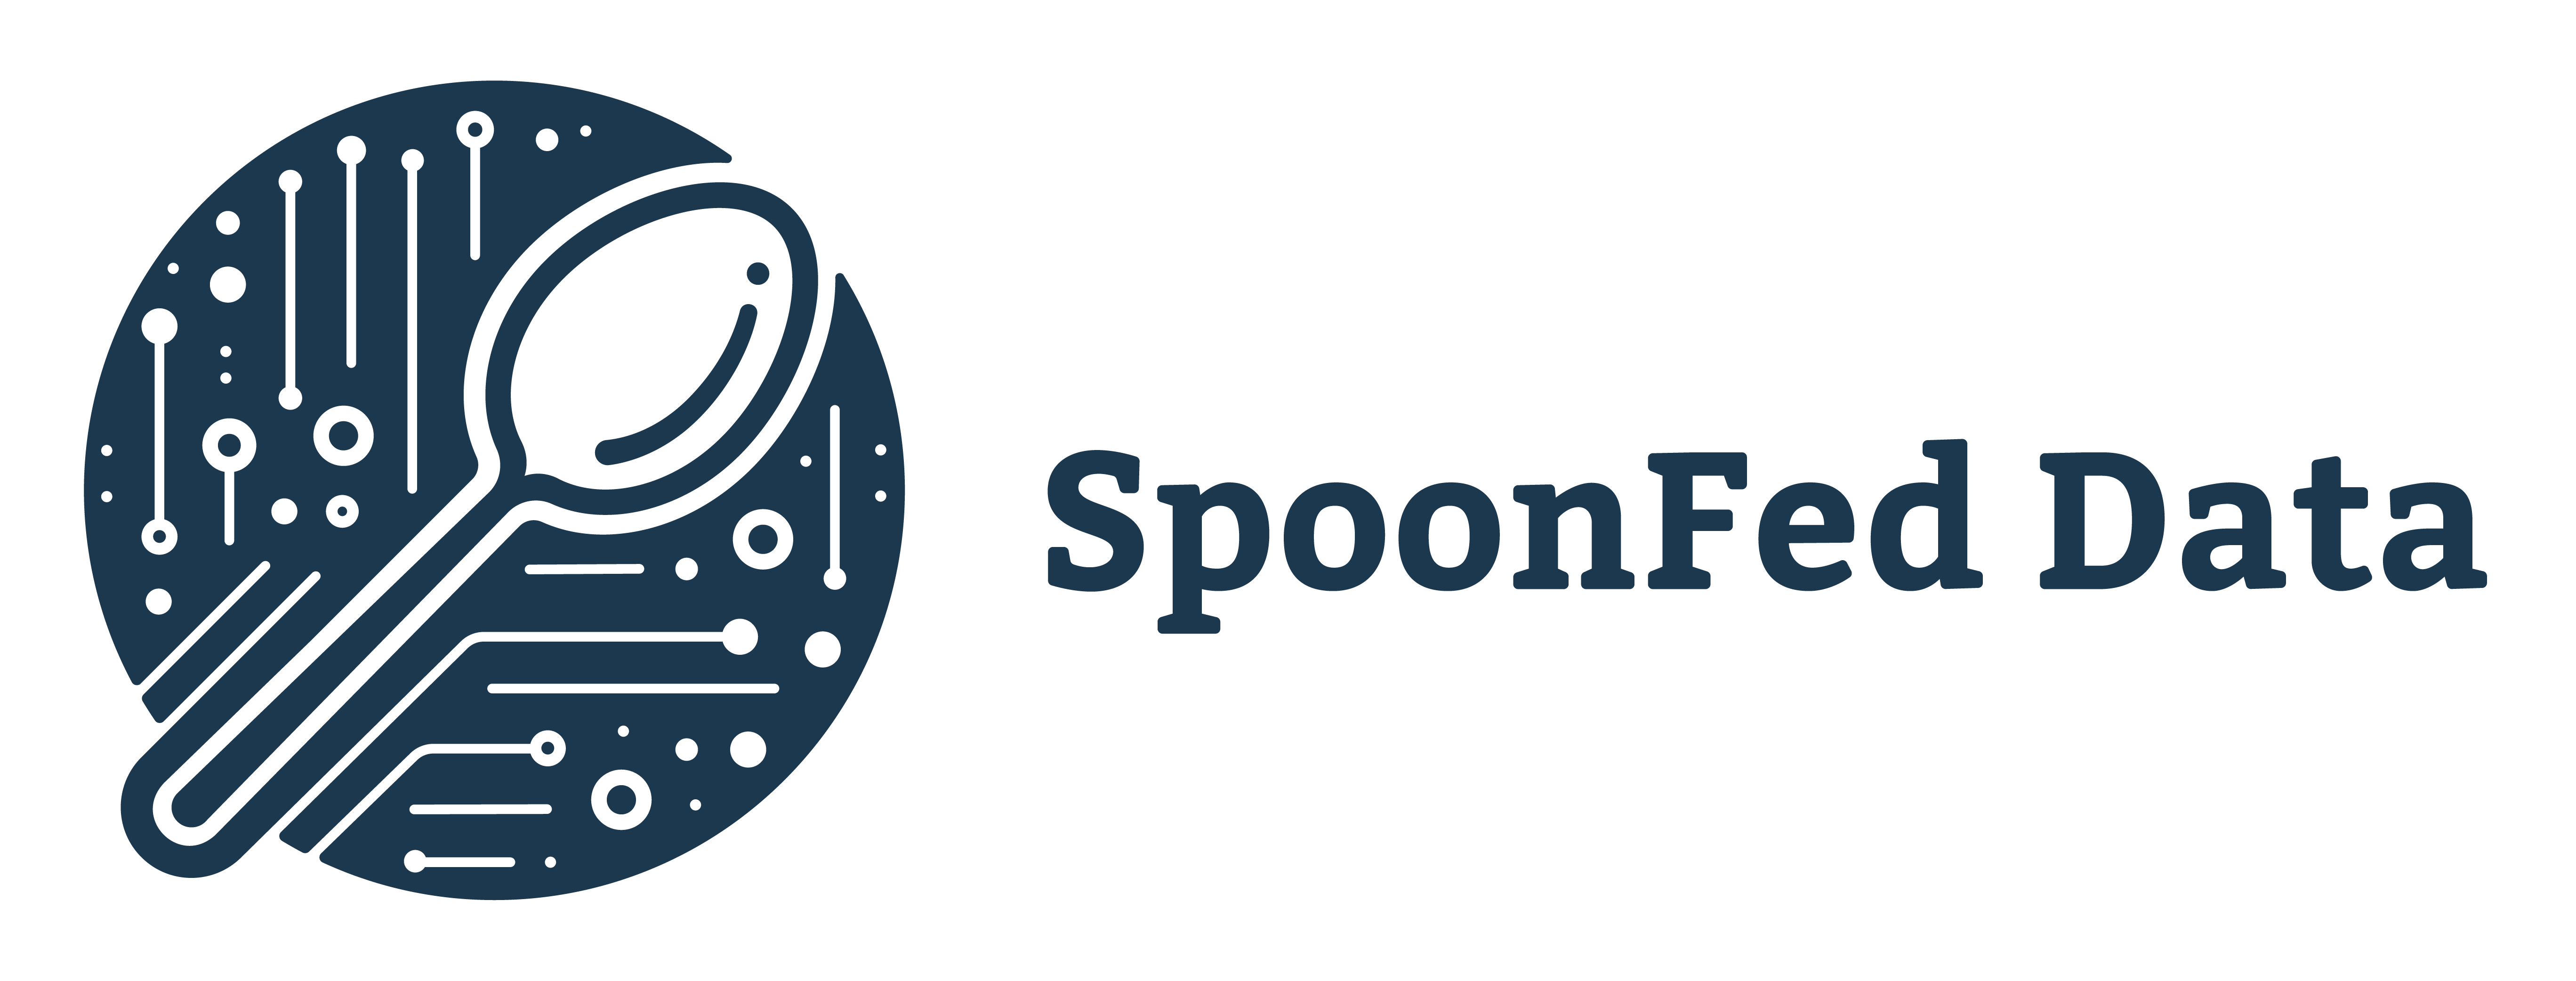 SpoonFed Data new-08